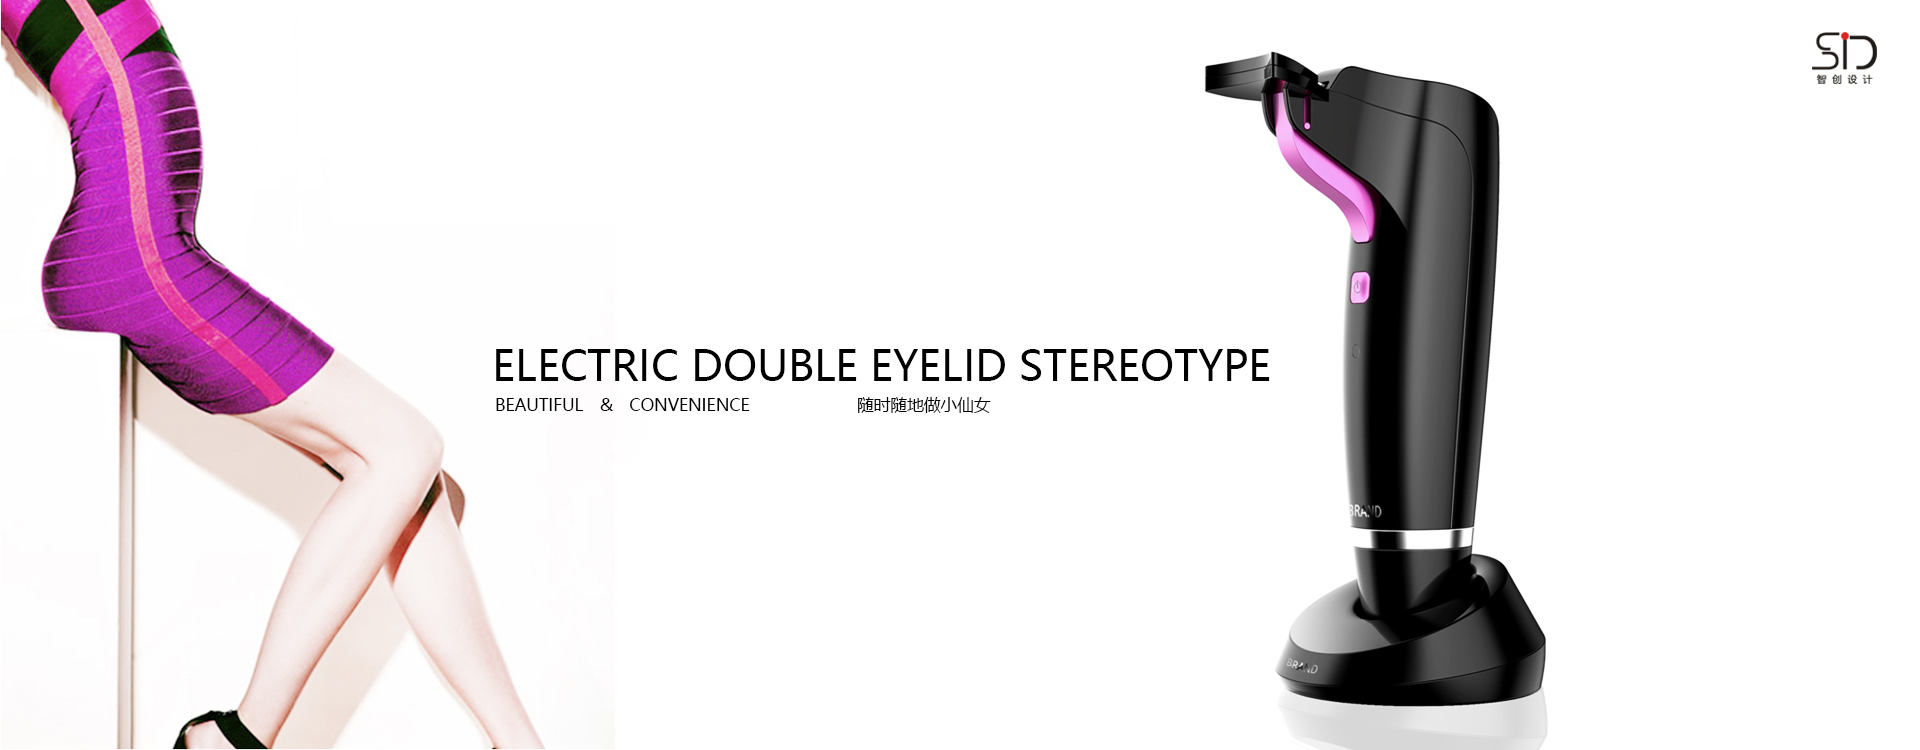 Eyelid 美容类产品设计